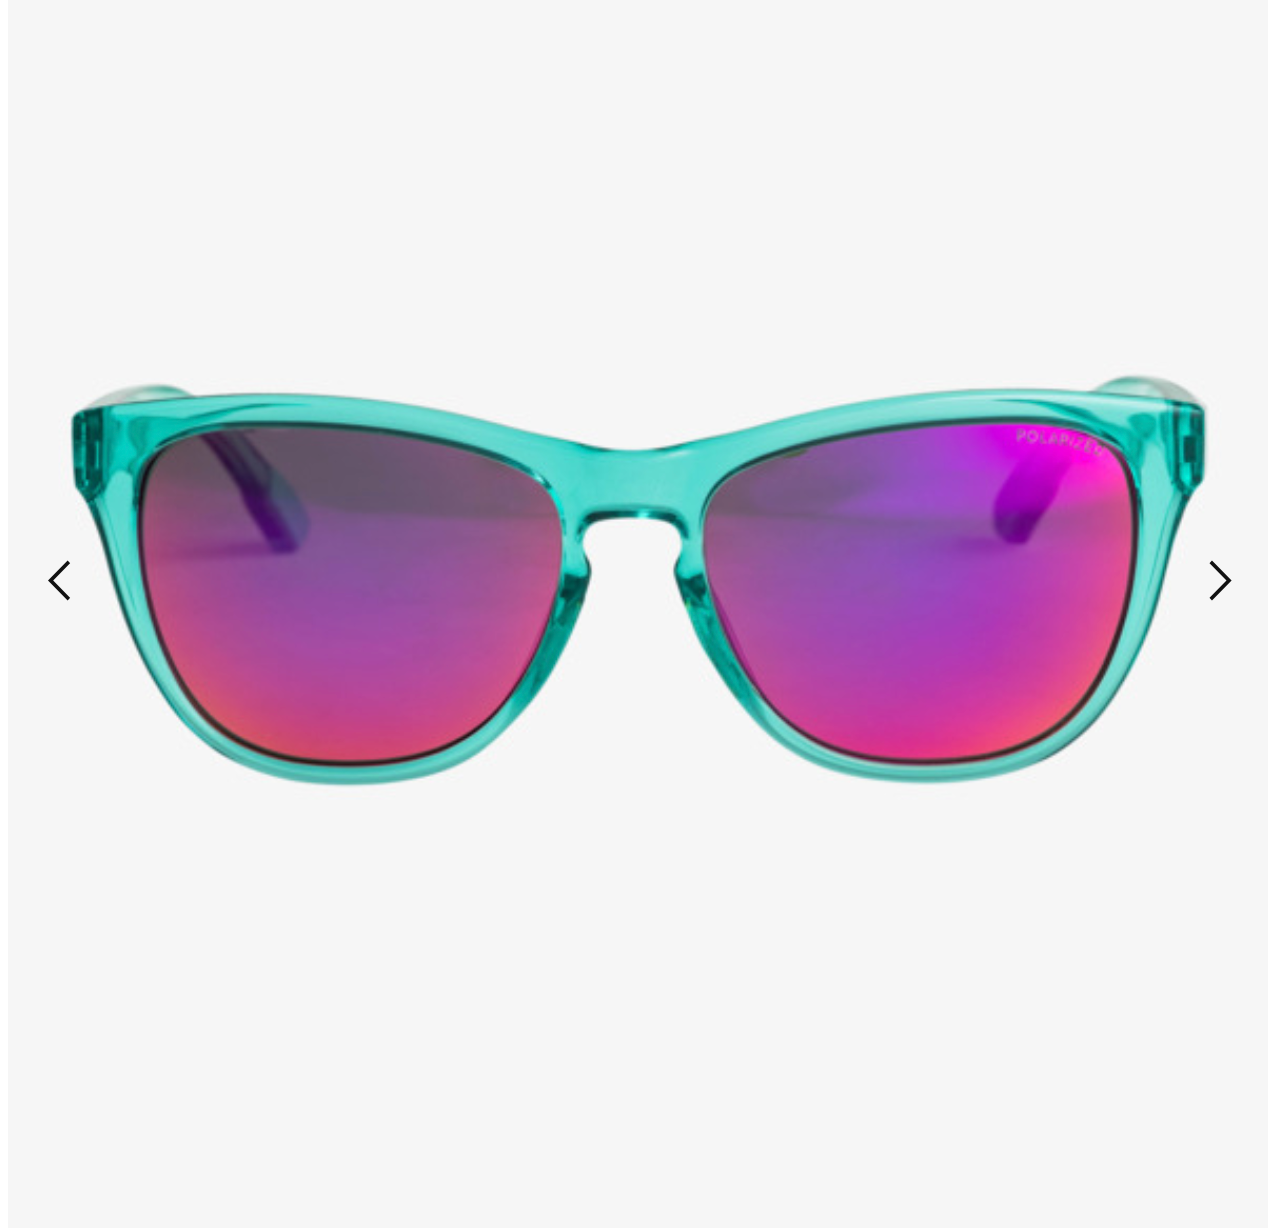 ROXY Rose P - Polarized Sunglasses for Women